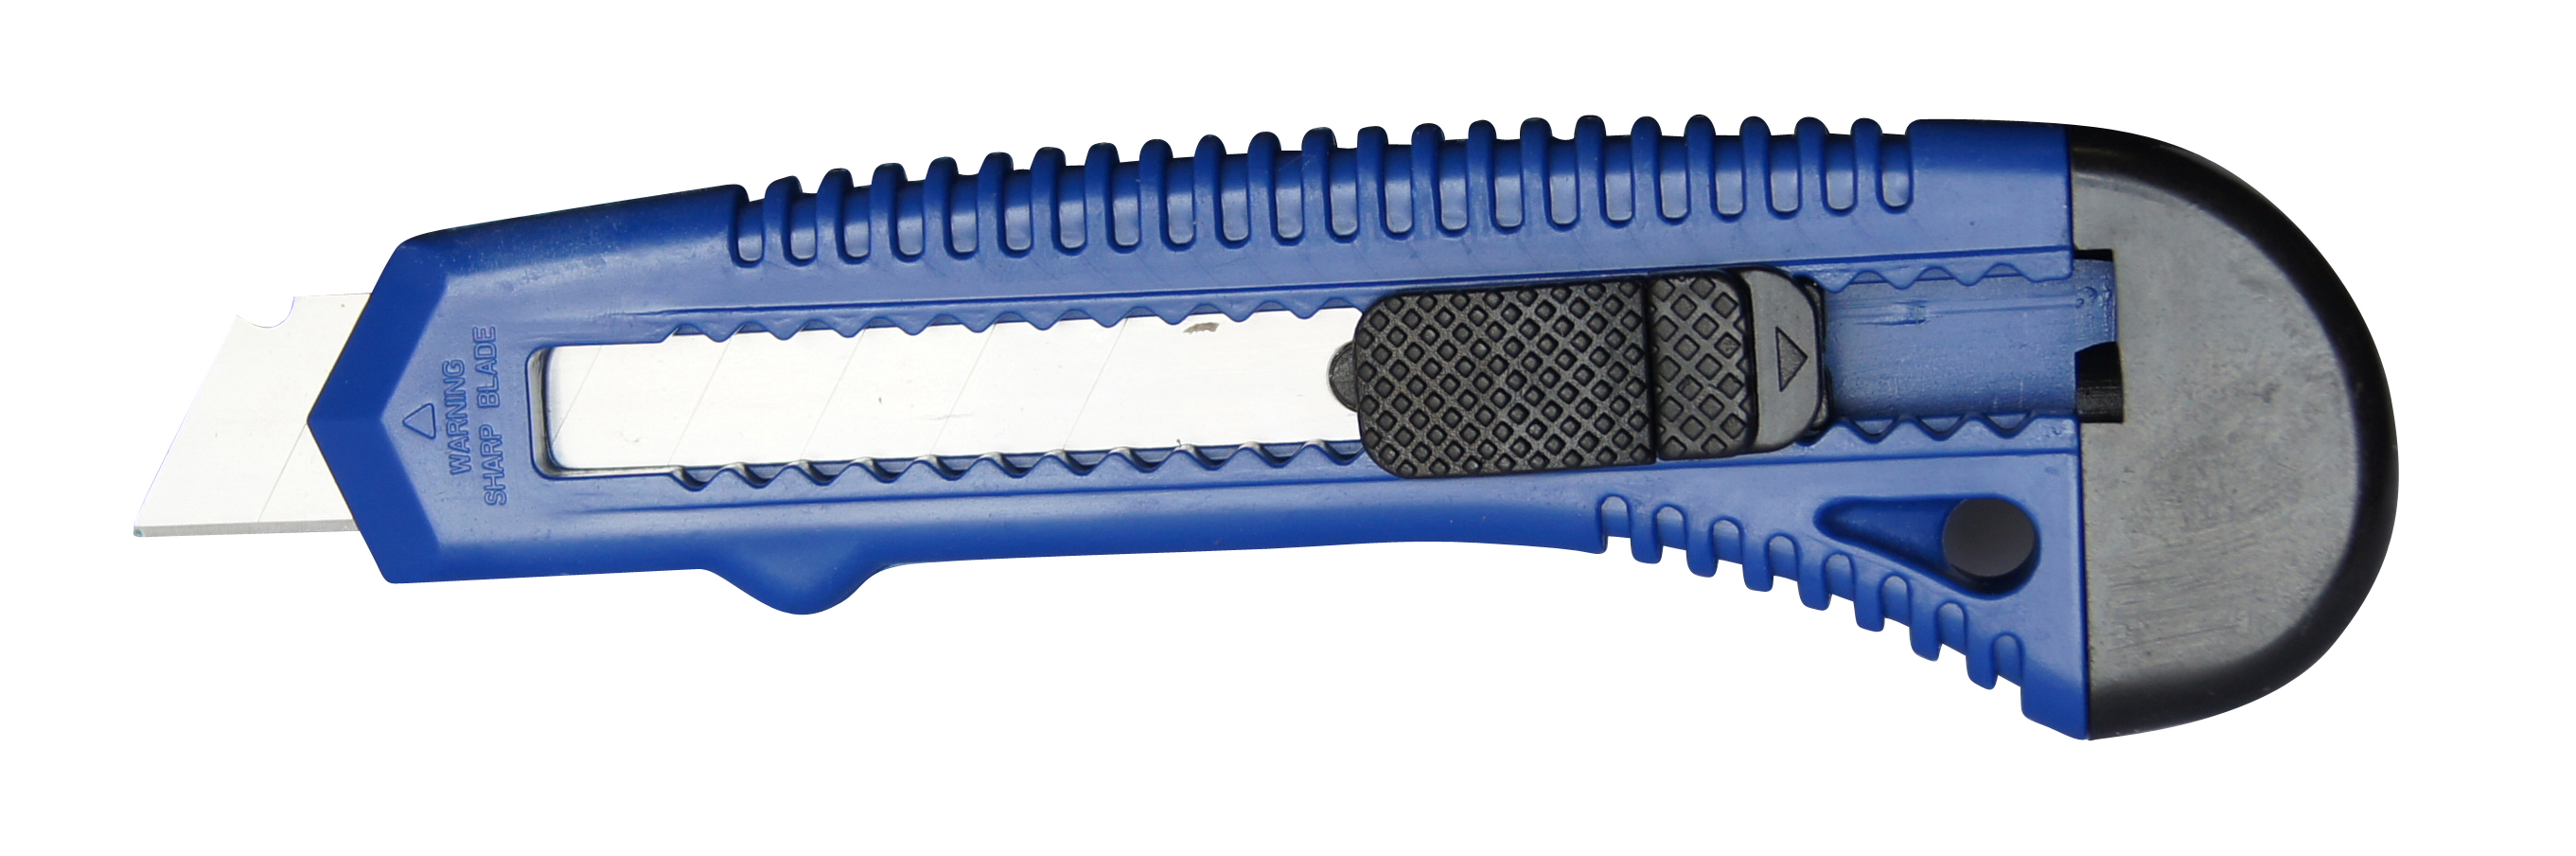 18mm Contractors Plastic Snap-Off Blade Knife